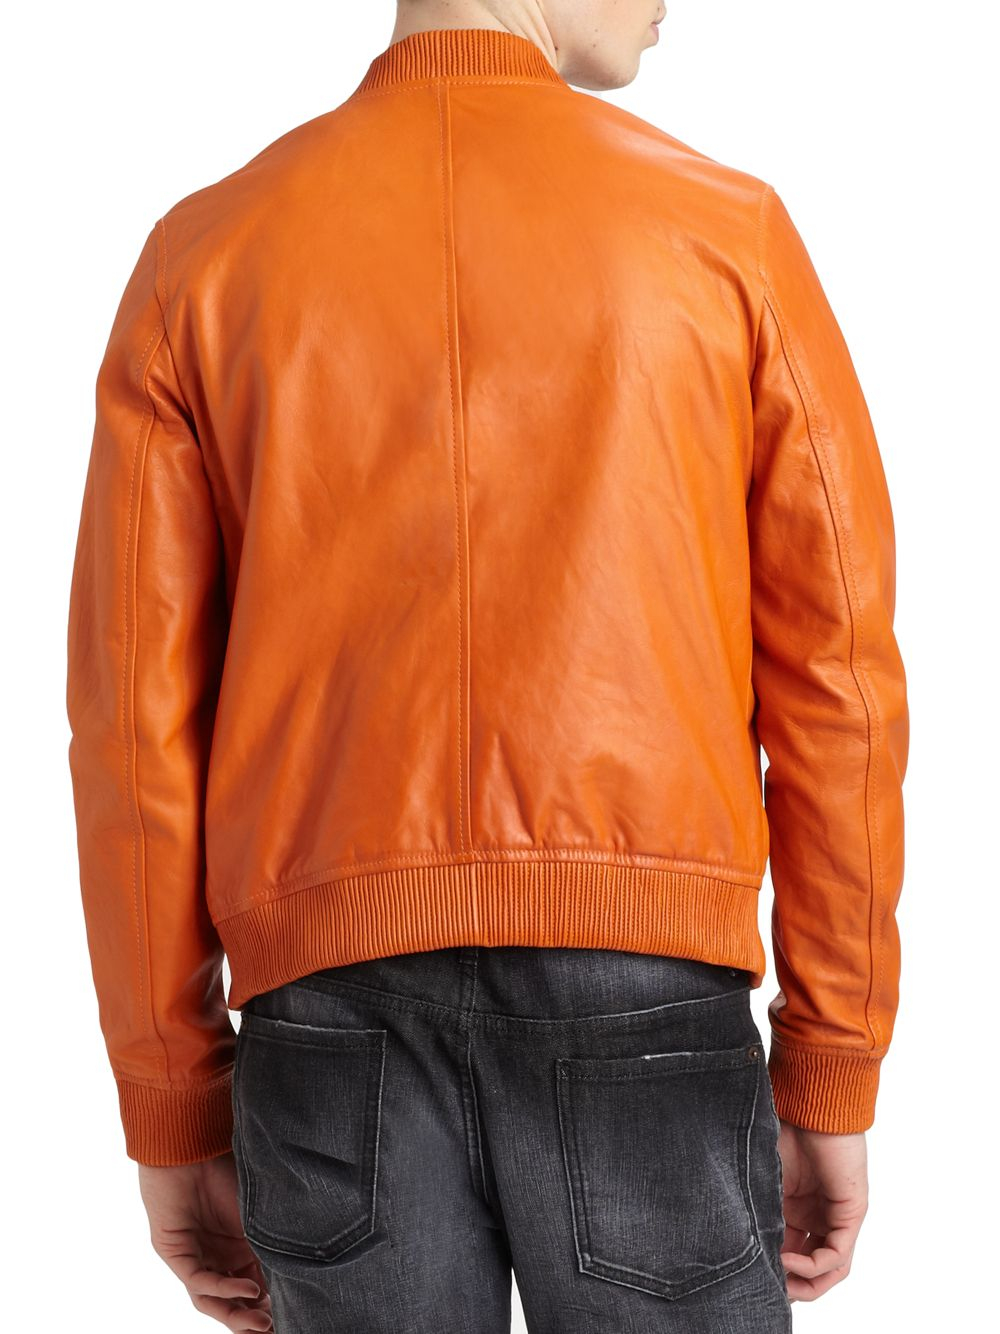 Lyst - Dsquared² Leather Bomber Jacket in Orange for Men